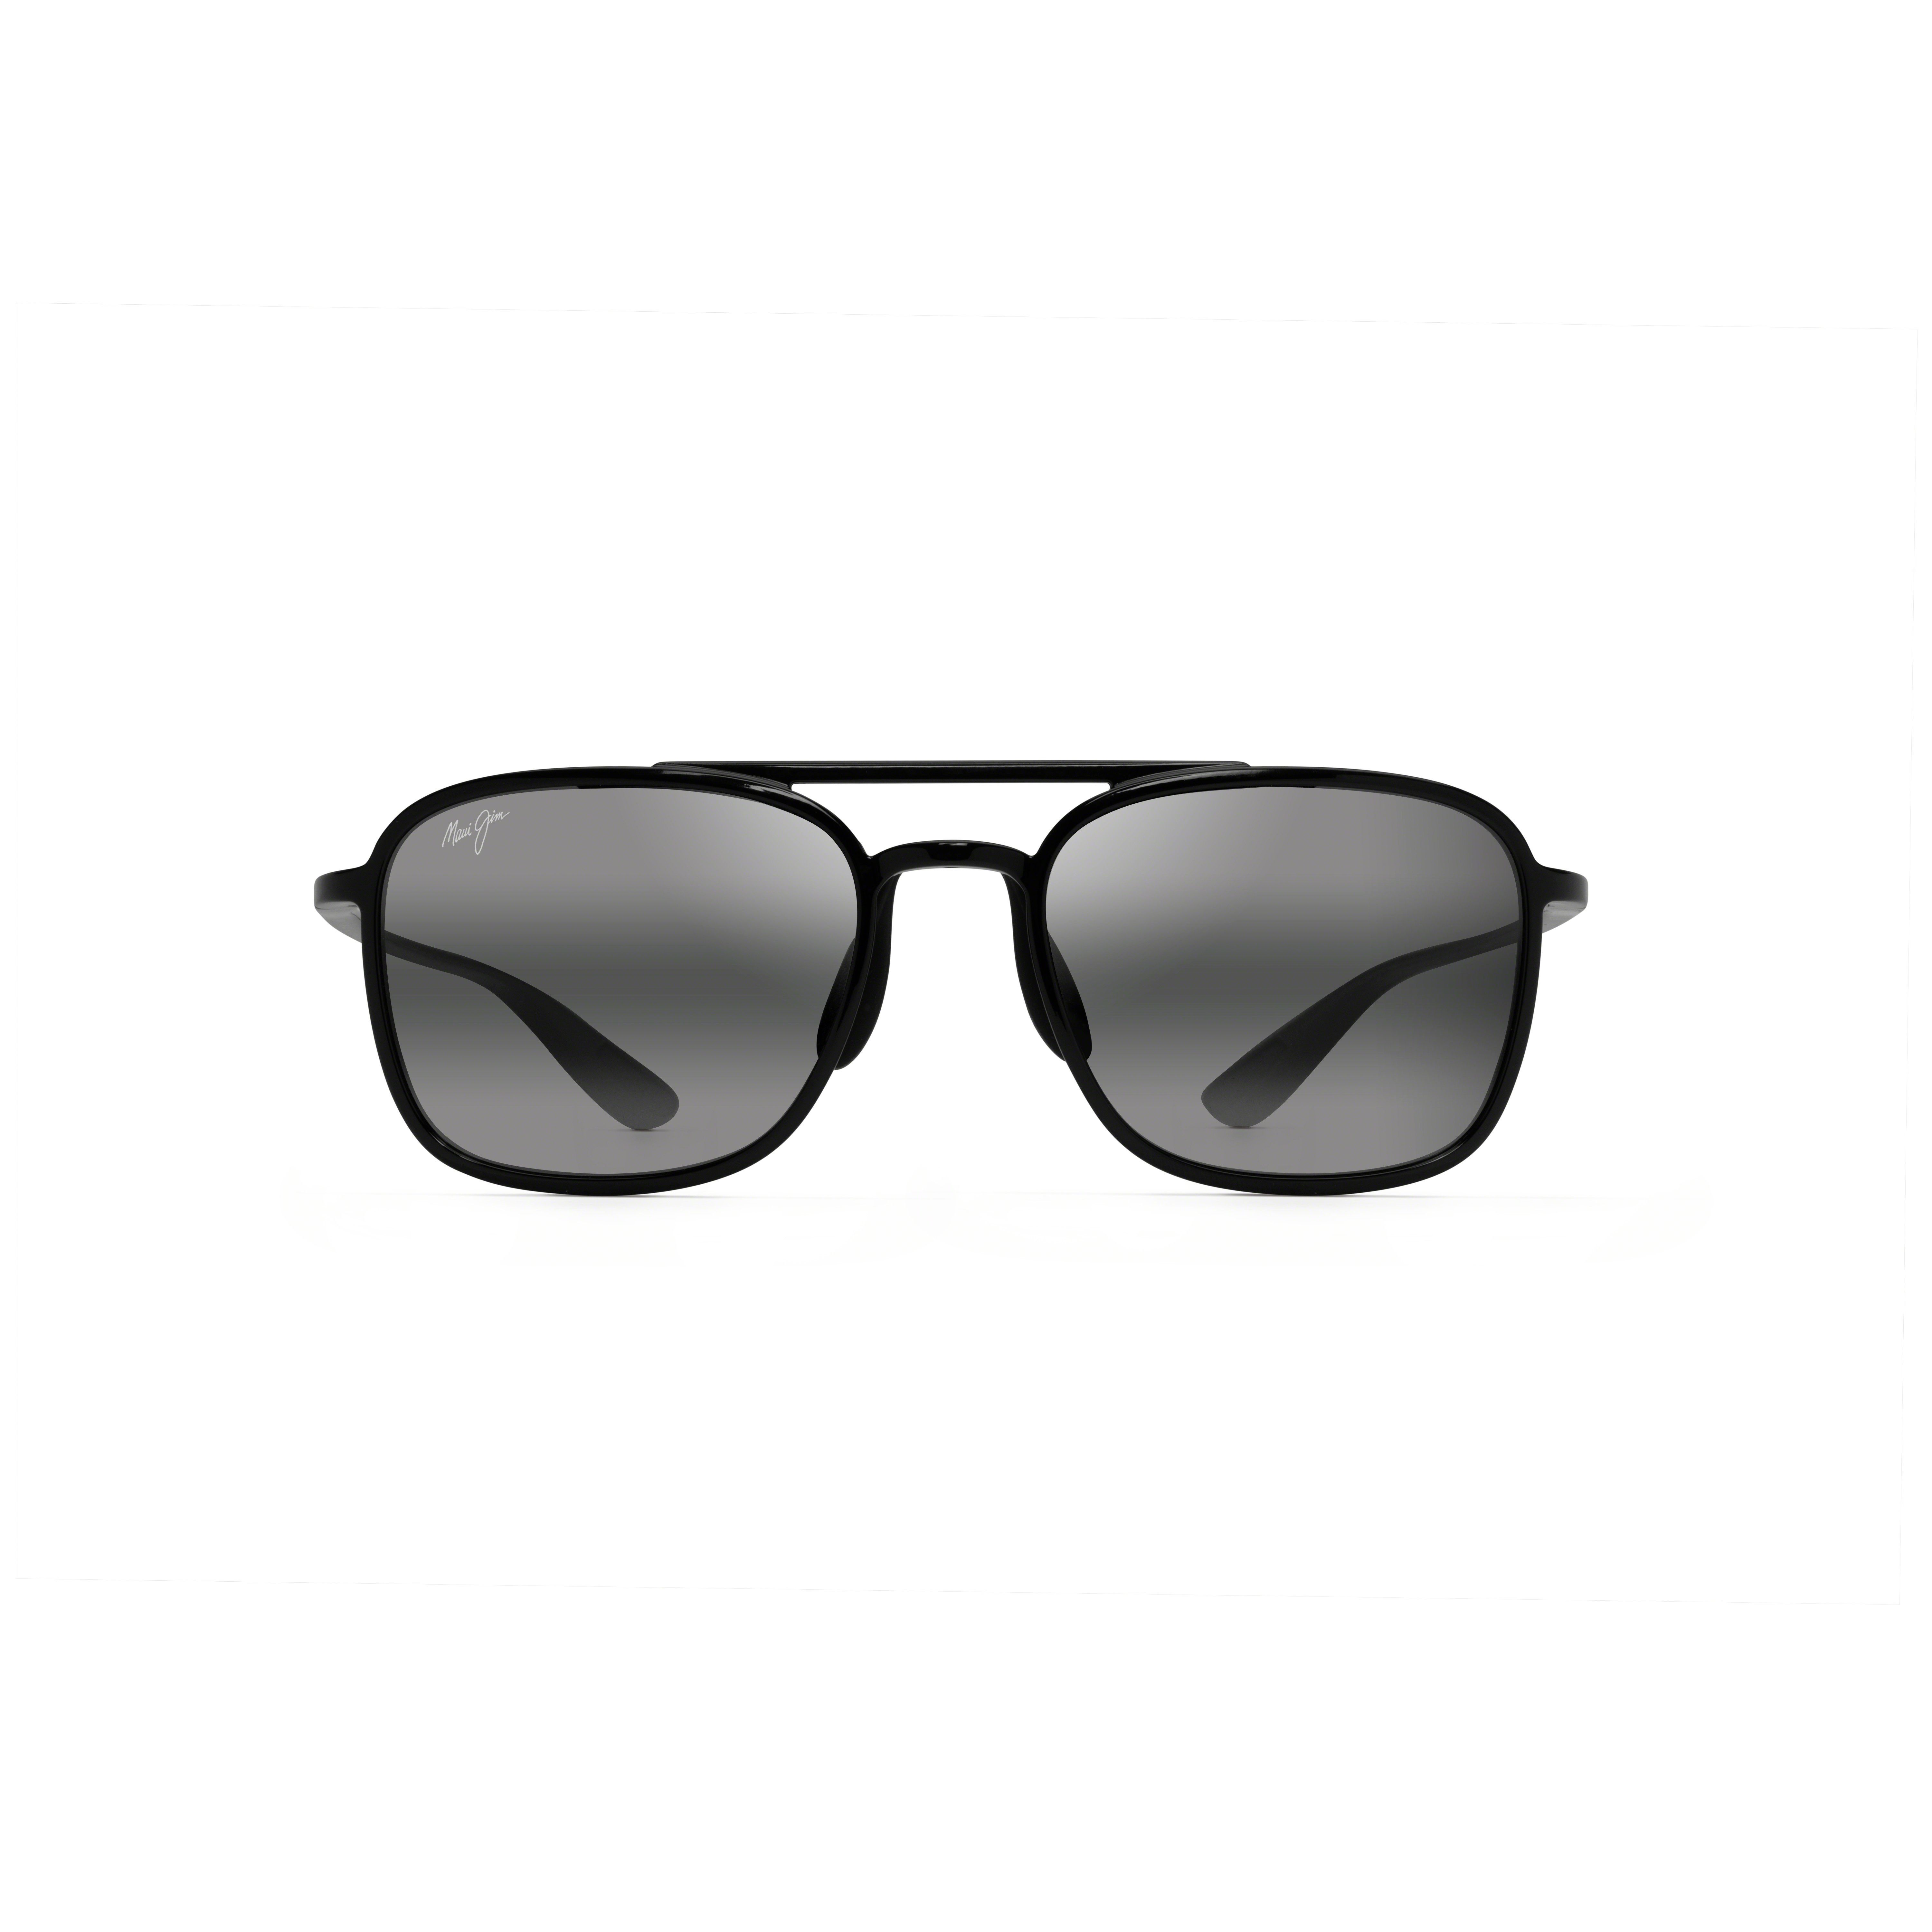 KEOKEA Pilot Sunglasses 02 - size 55